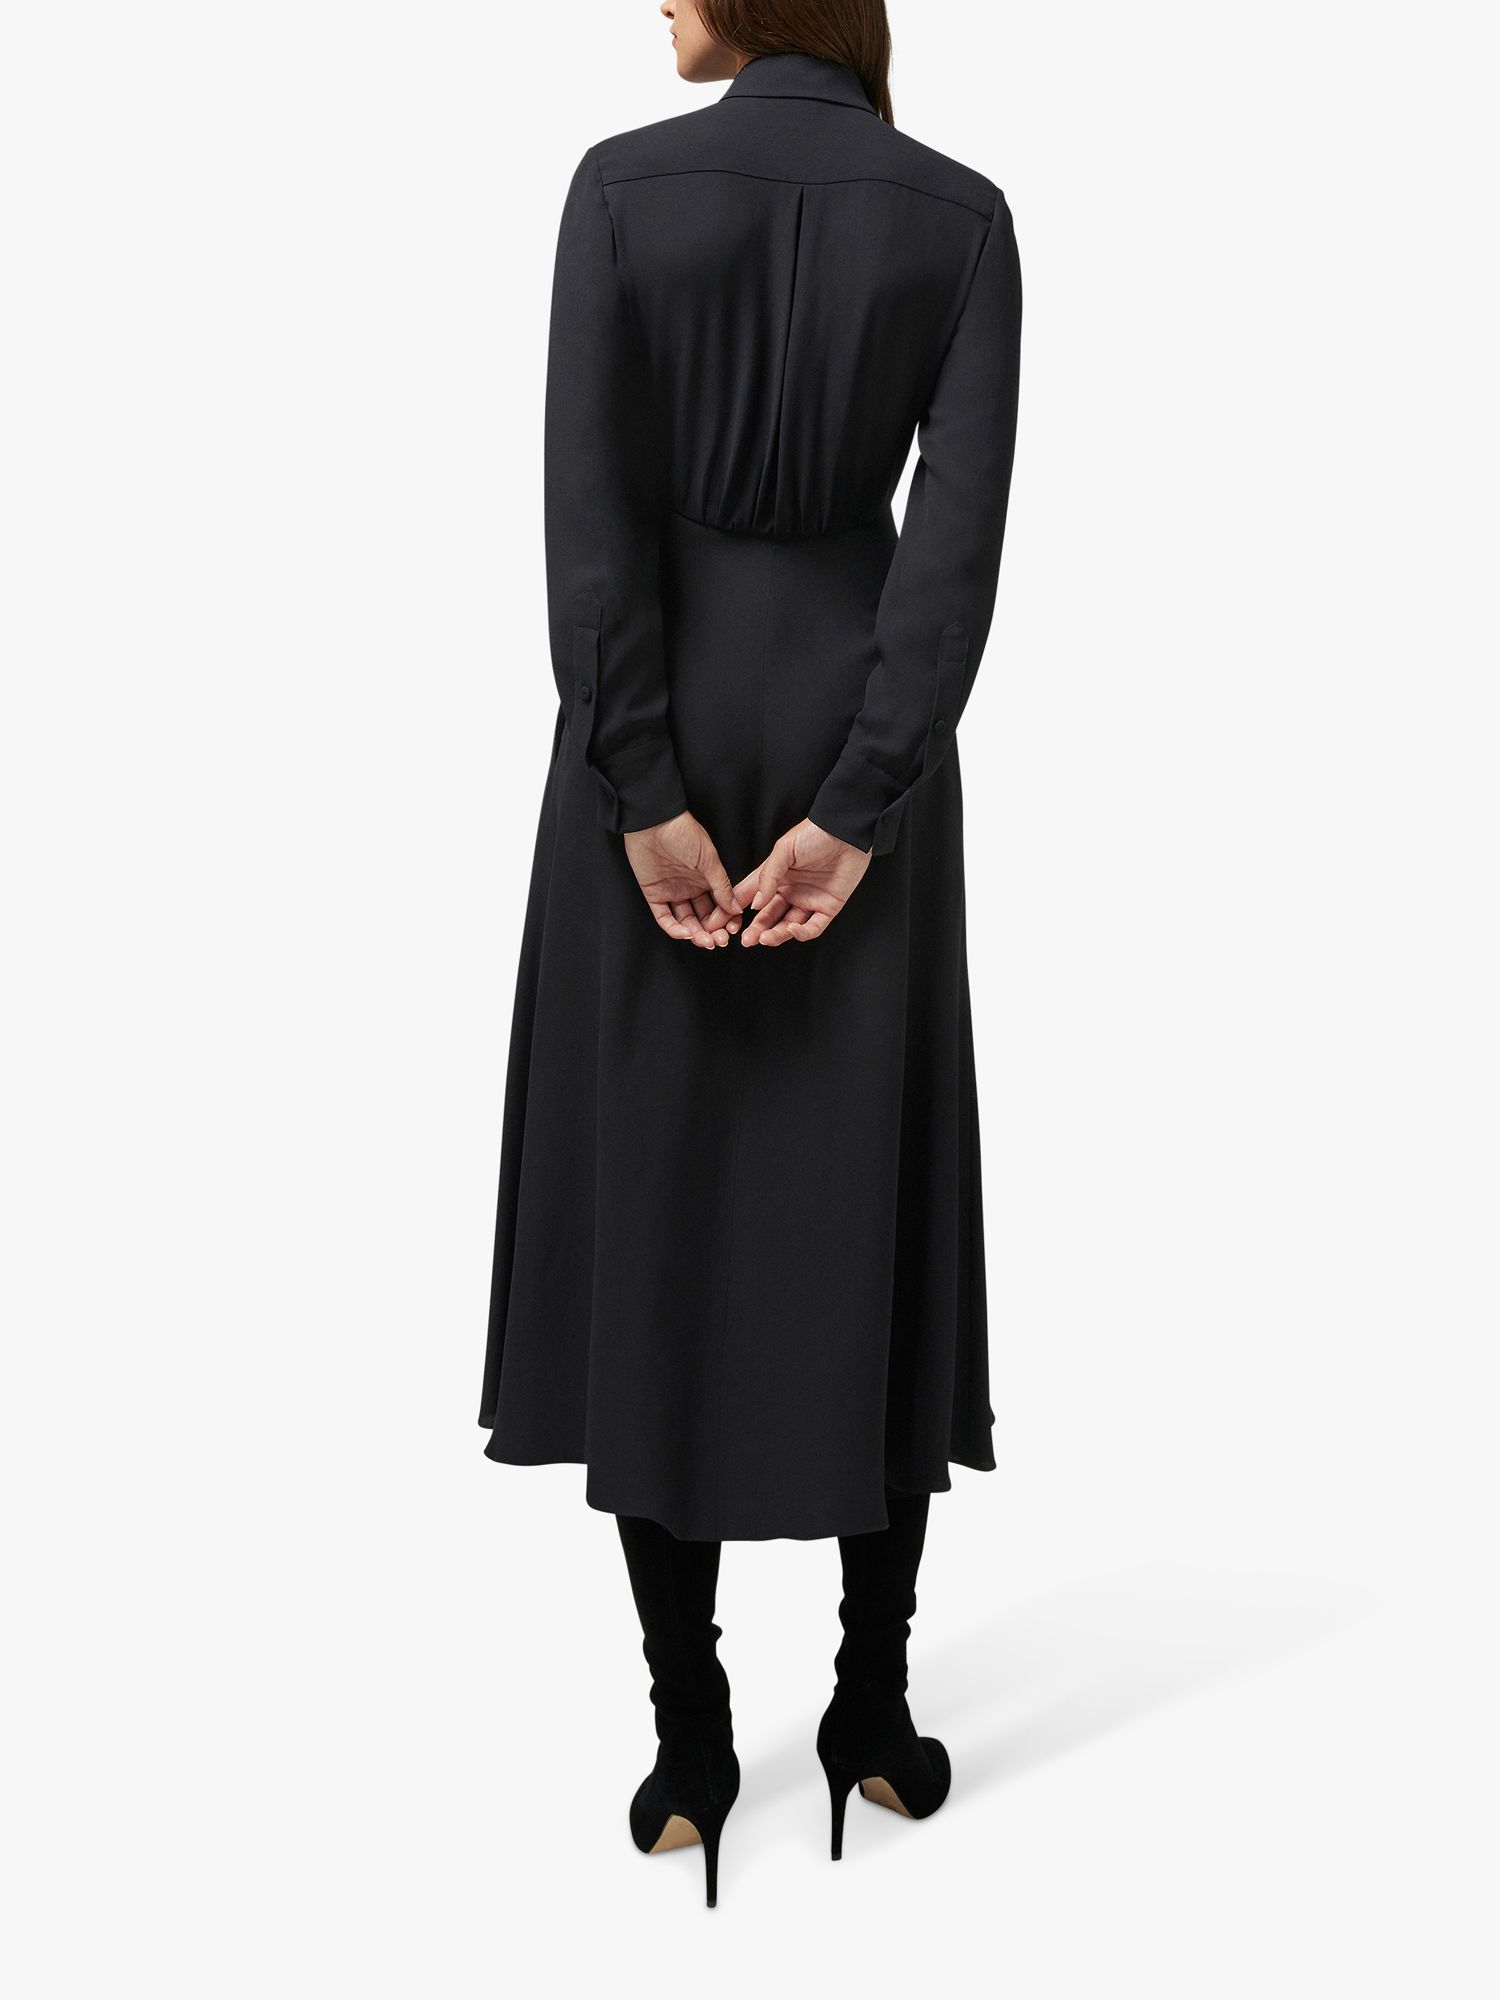 Buy Jasper Conran Claudia Empire Line Crepe Midi Dress Online at johnlewis.com